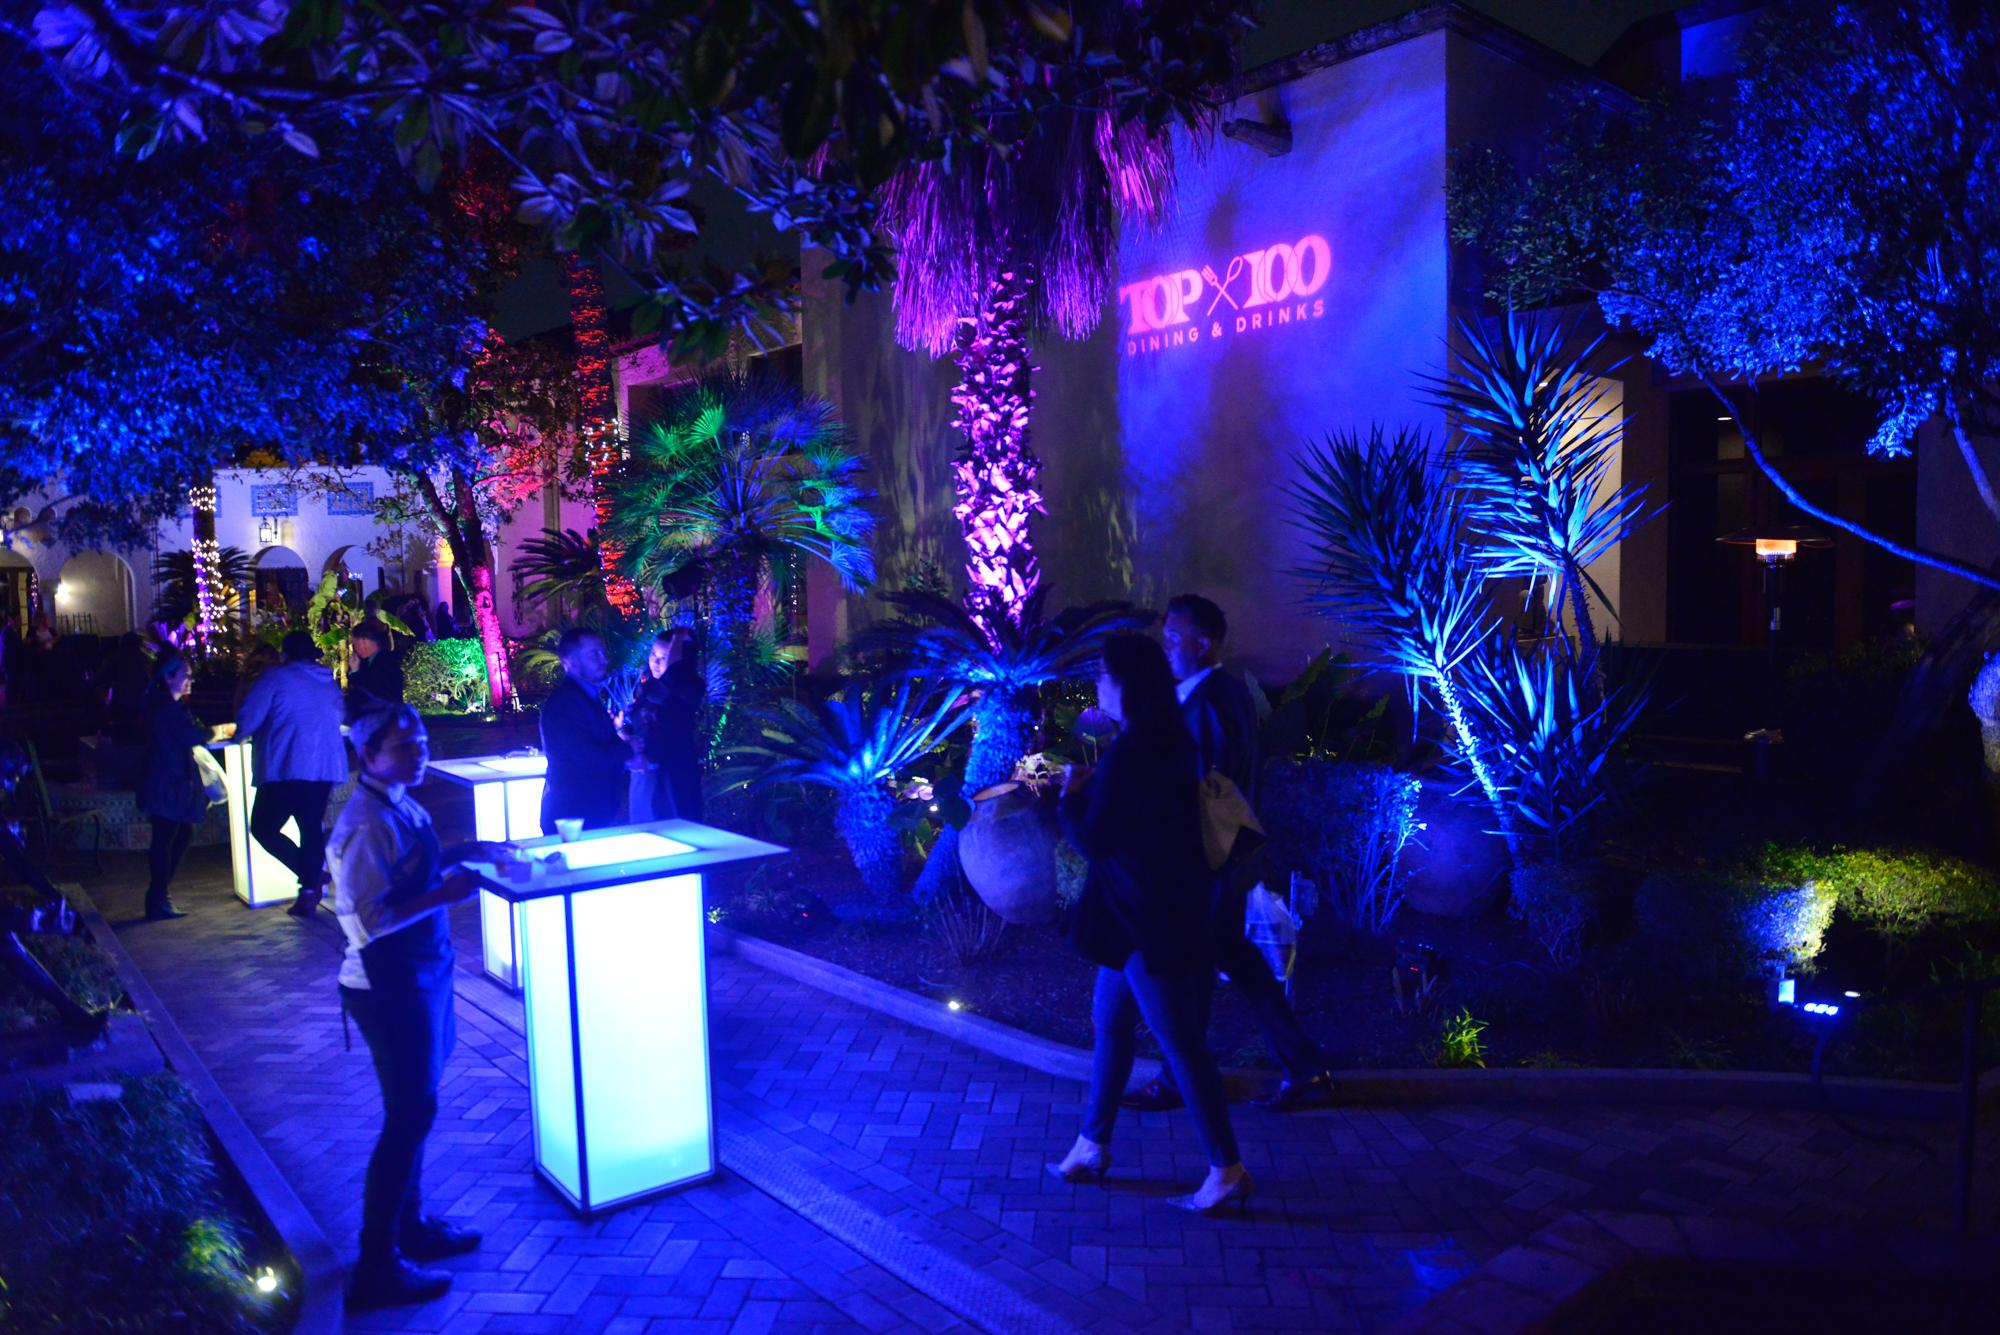 Top 100 Tasting Event showcased San Antonio's best food and drink